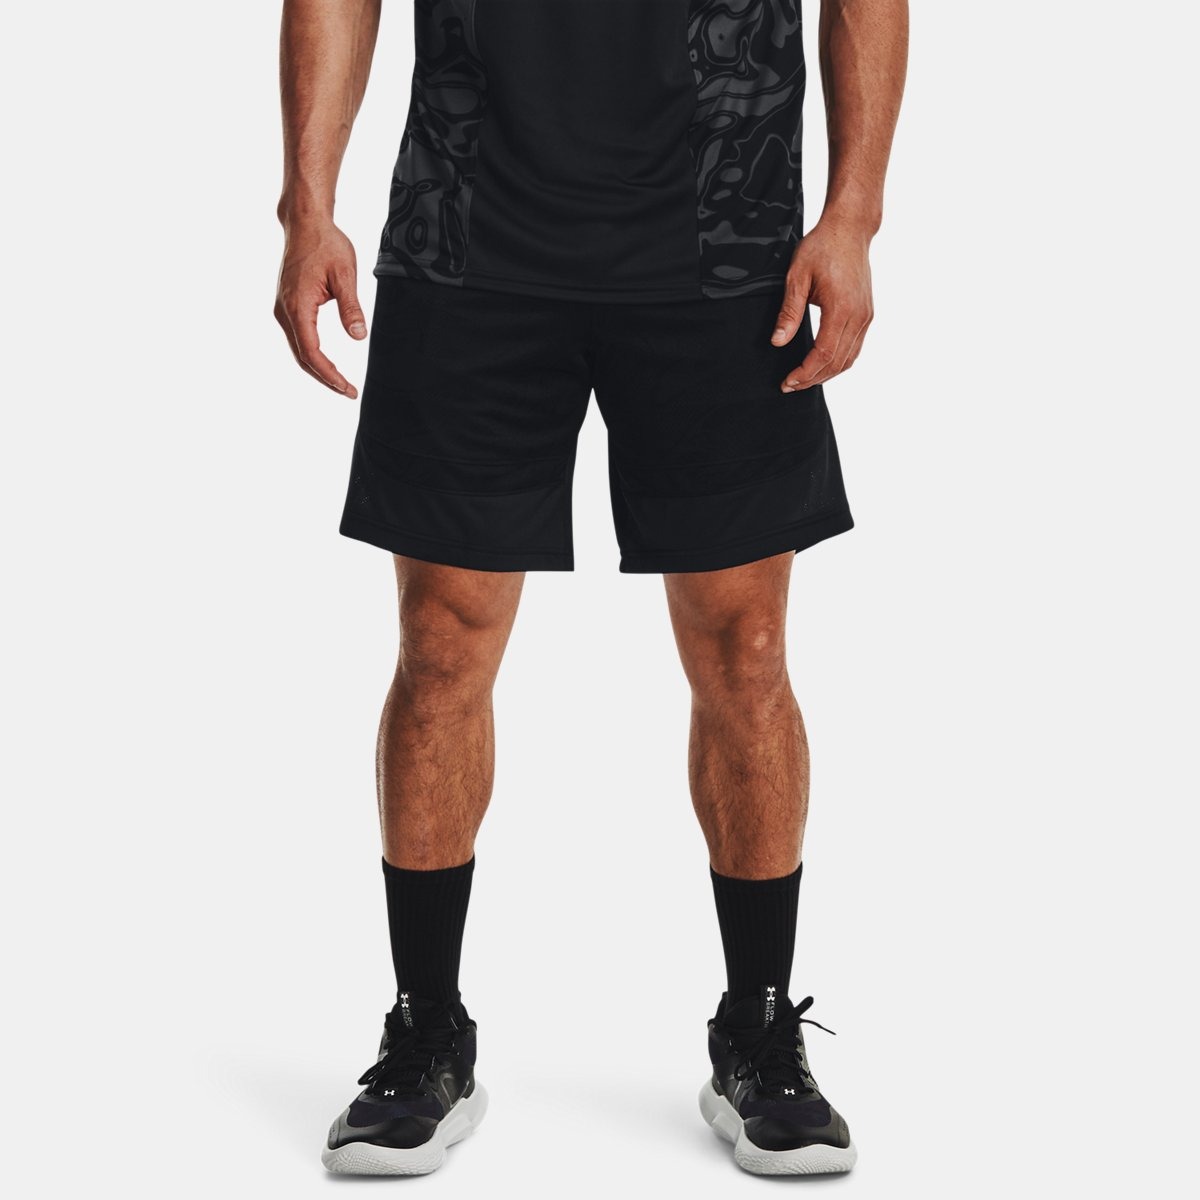 Black Shorts for Men at Under Armour GOOFASH